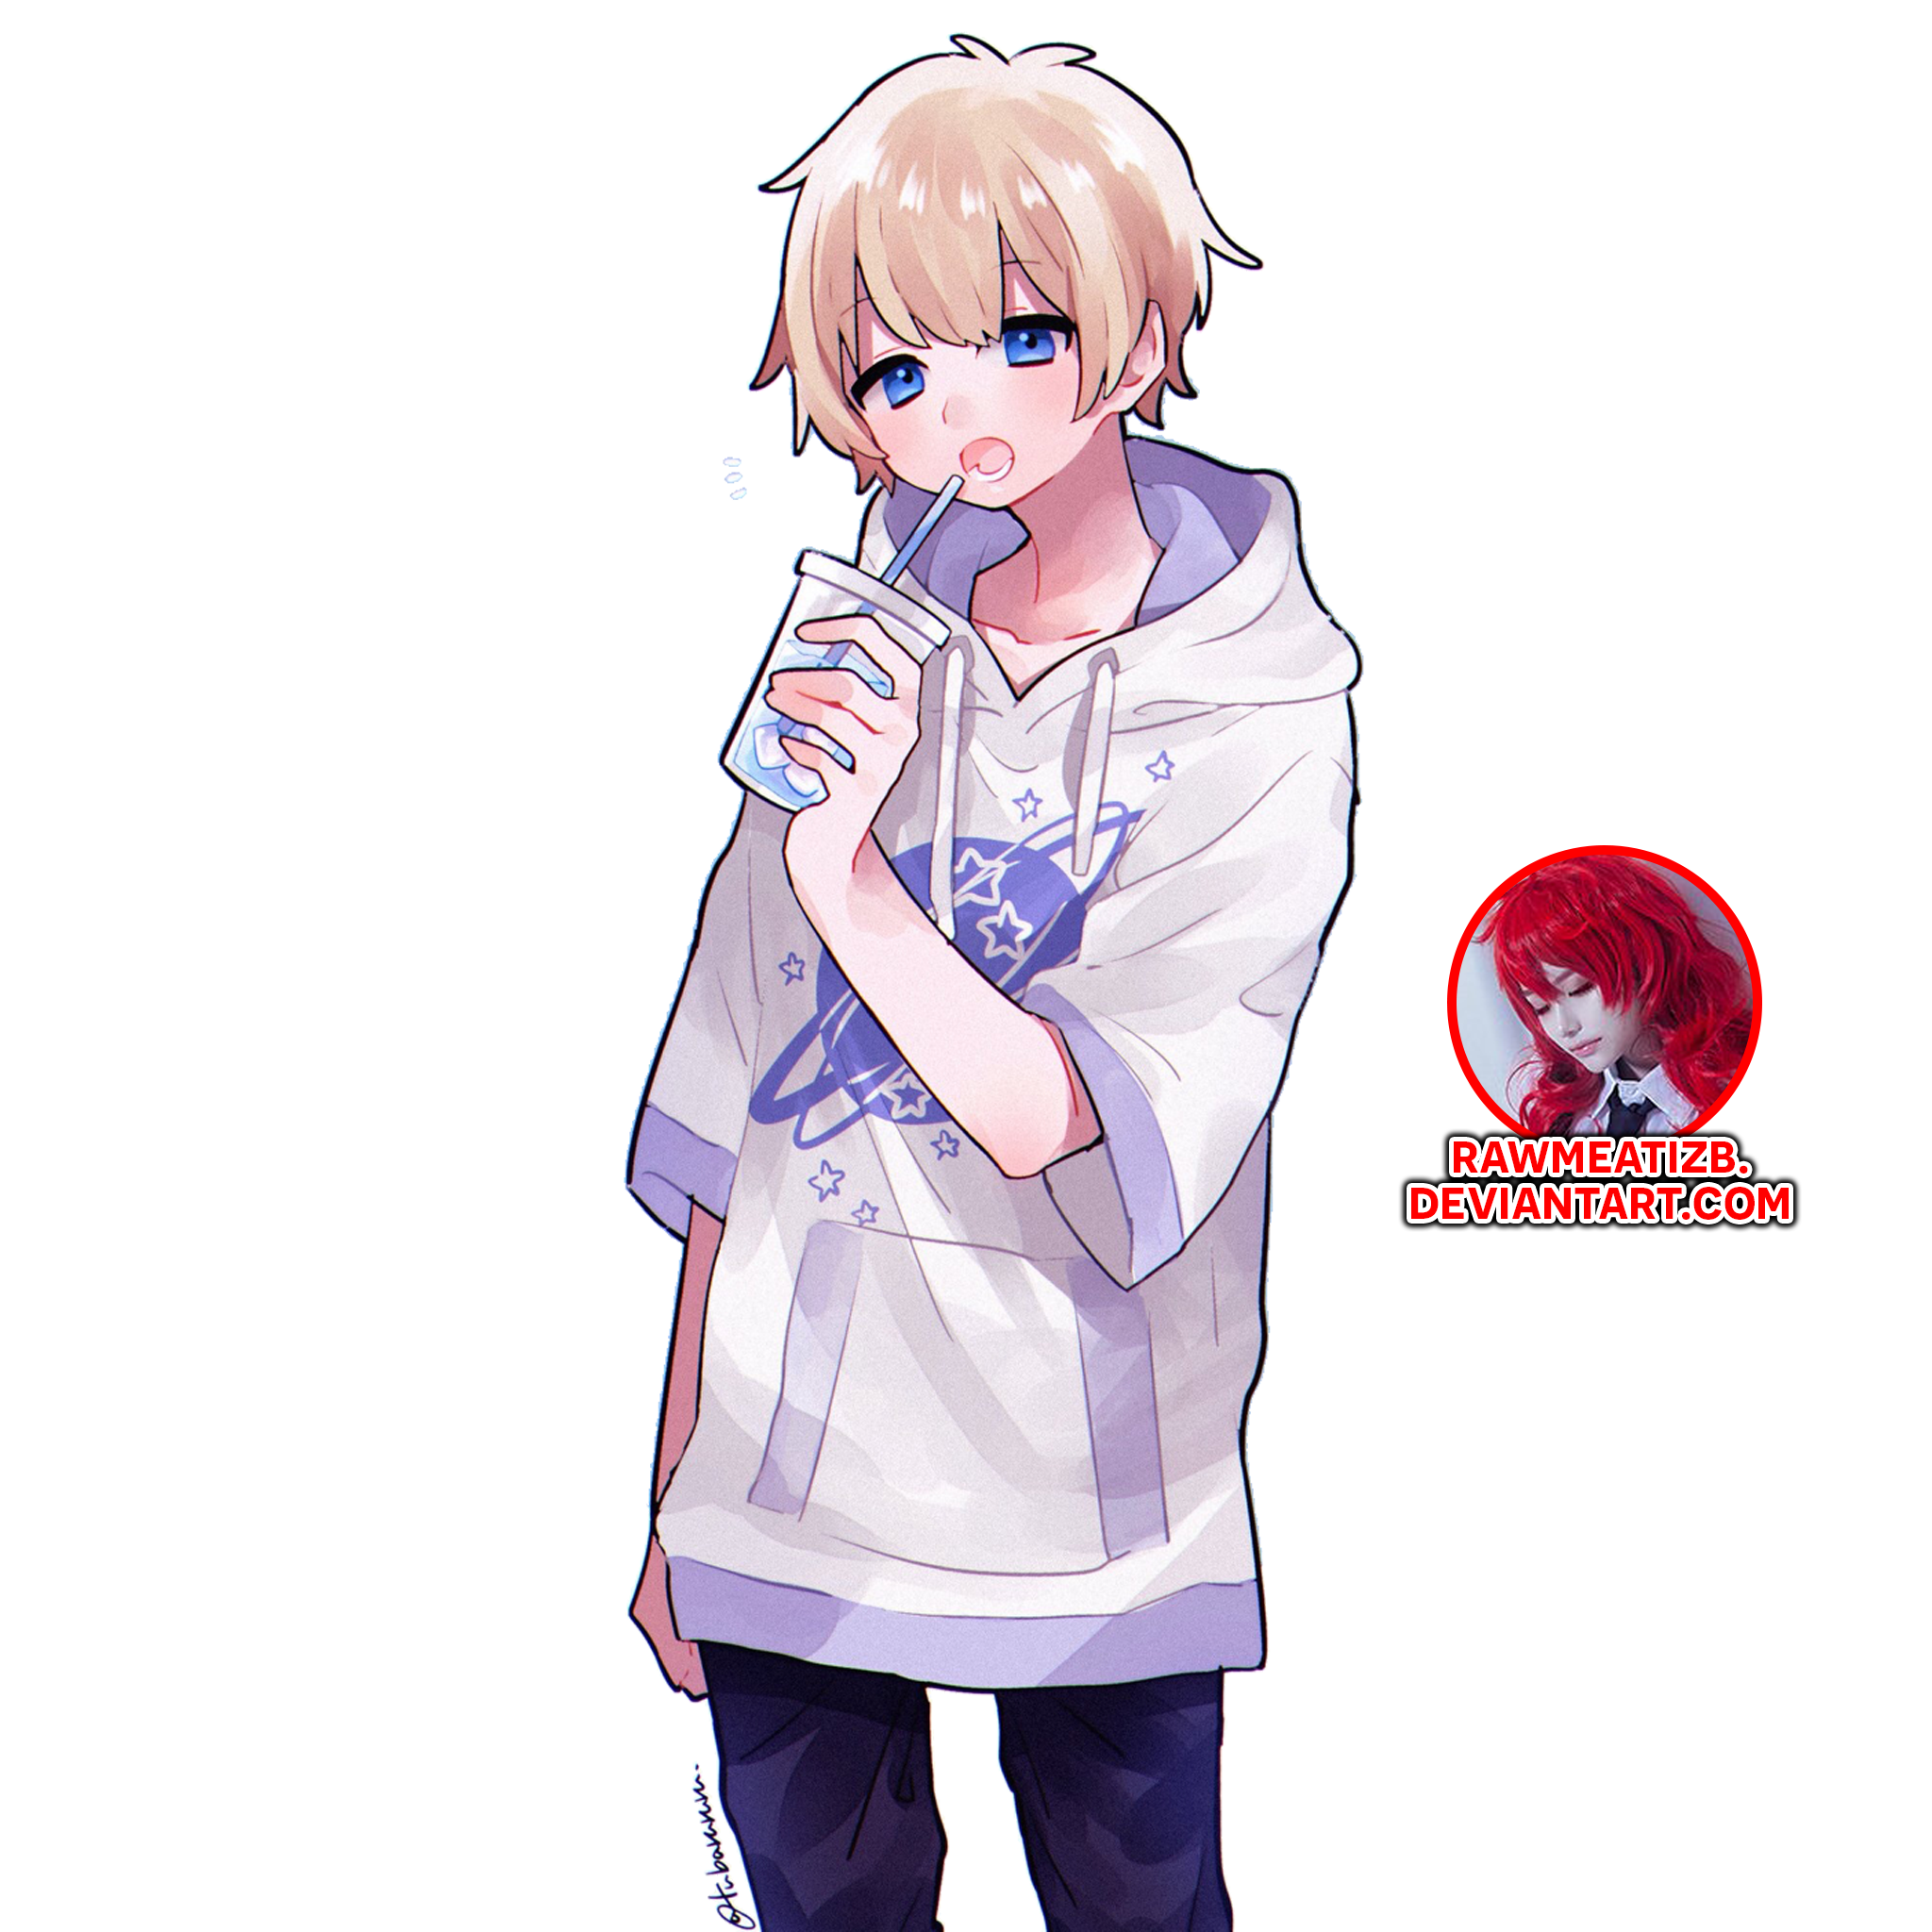 Anime boy icon by yunokamado on DeviantArt